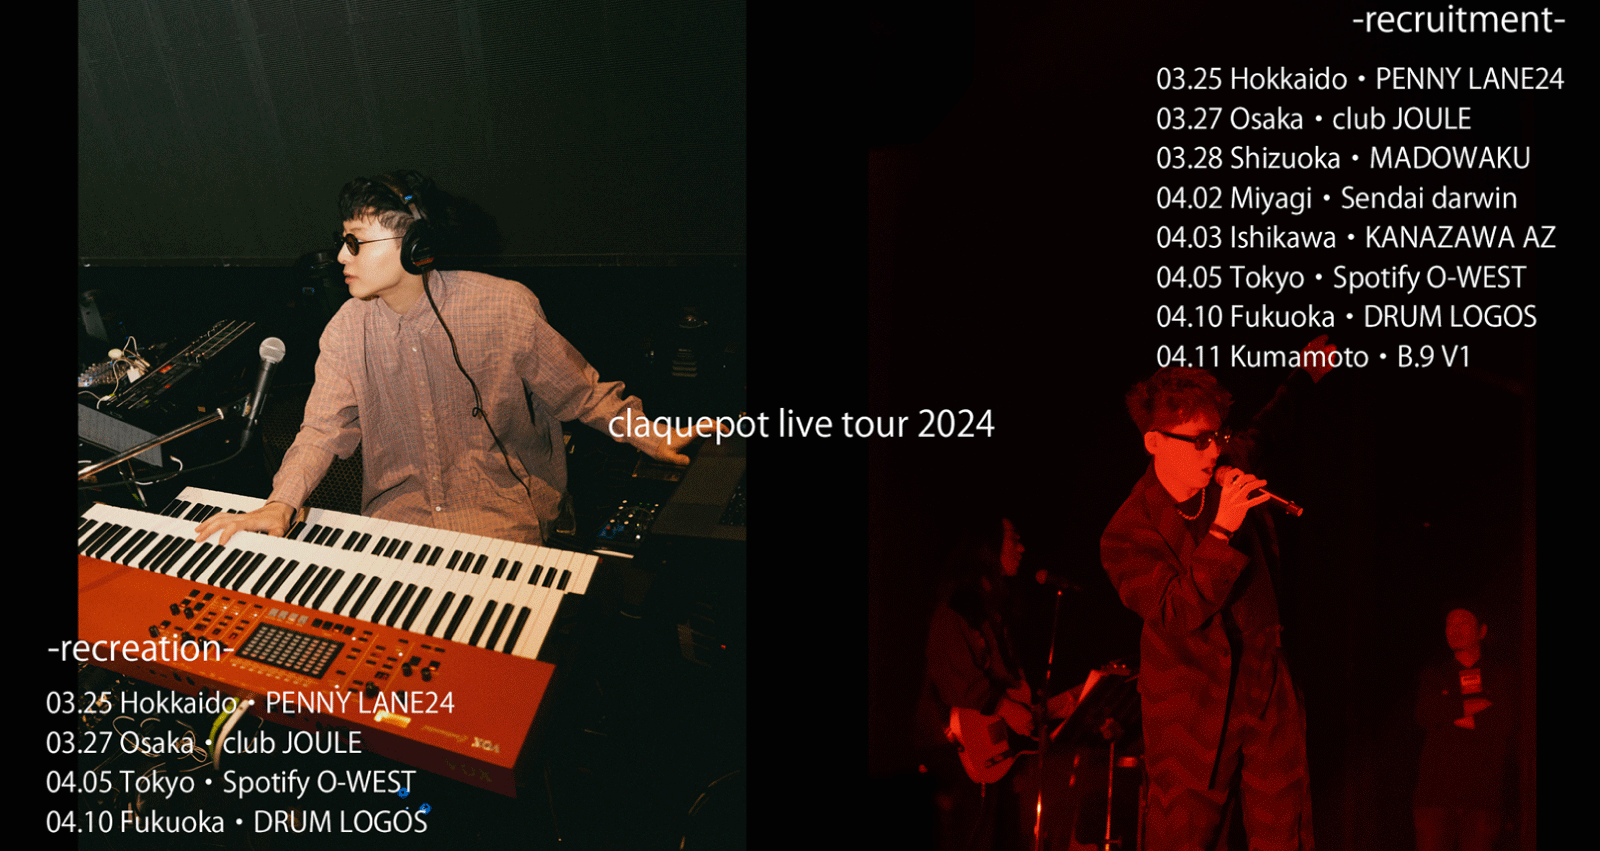 claquepot live tour 2024 -recruitment-